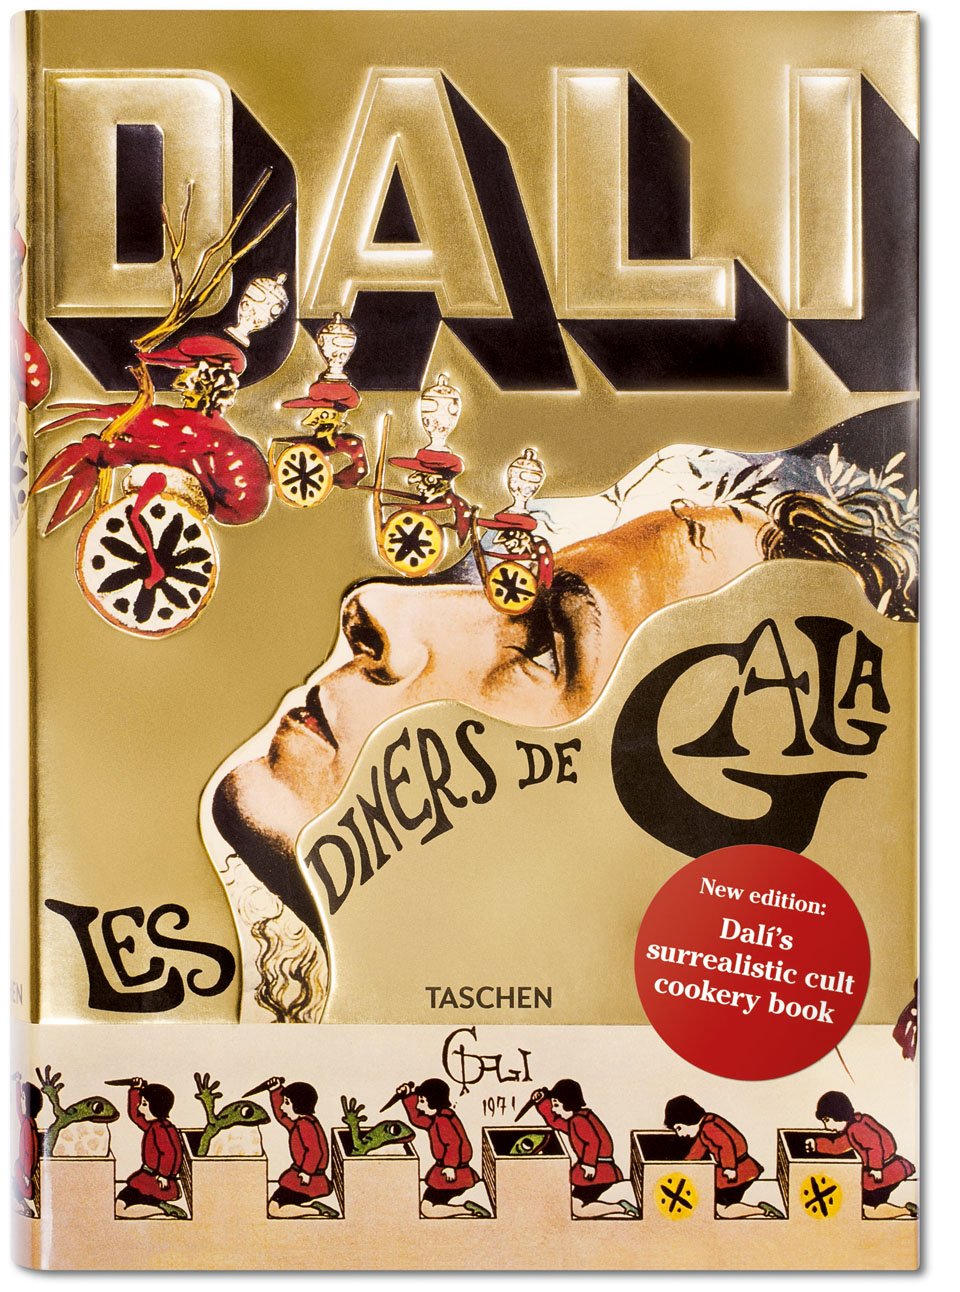 Salvador Dalí, Les Dîners de Gala, 1973 (reprinted 2016). Courtesy Taschen